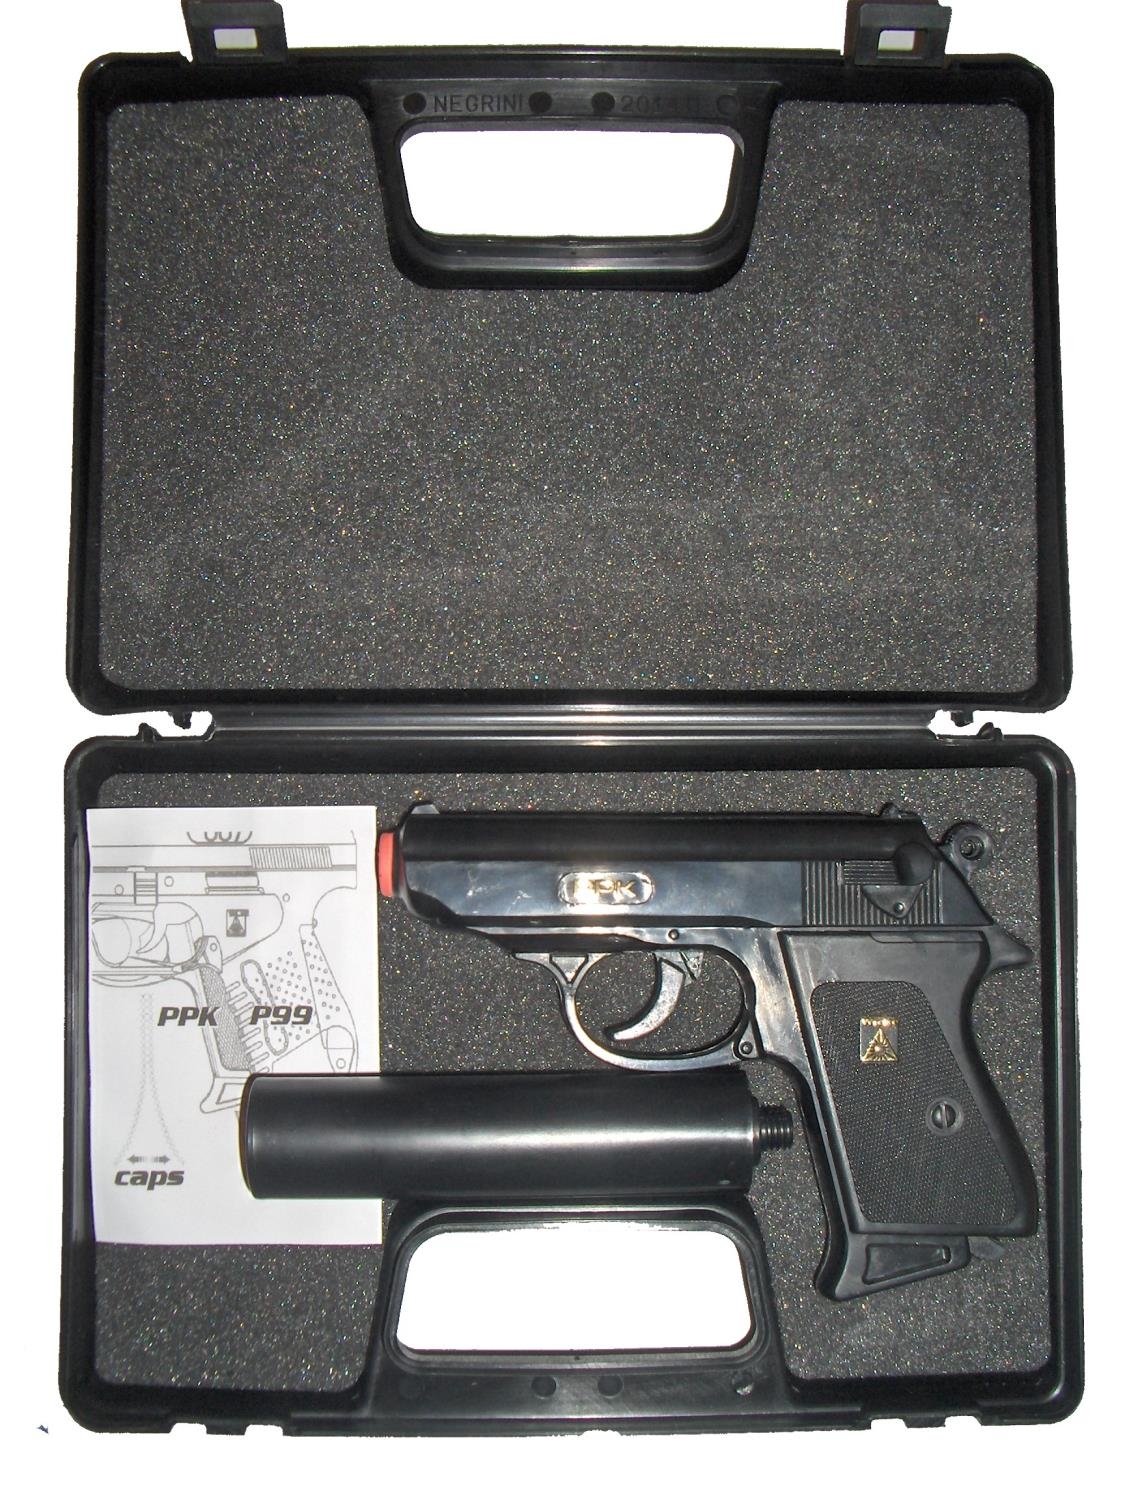 James Bond Gun LONE STAR SPECIAL AGENT 007 Walther PPK TOY GUN WICKE 25 Shots 